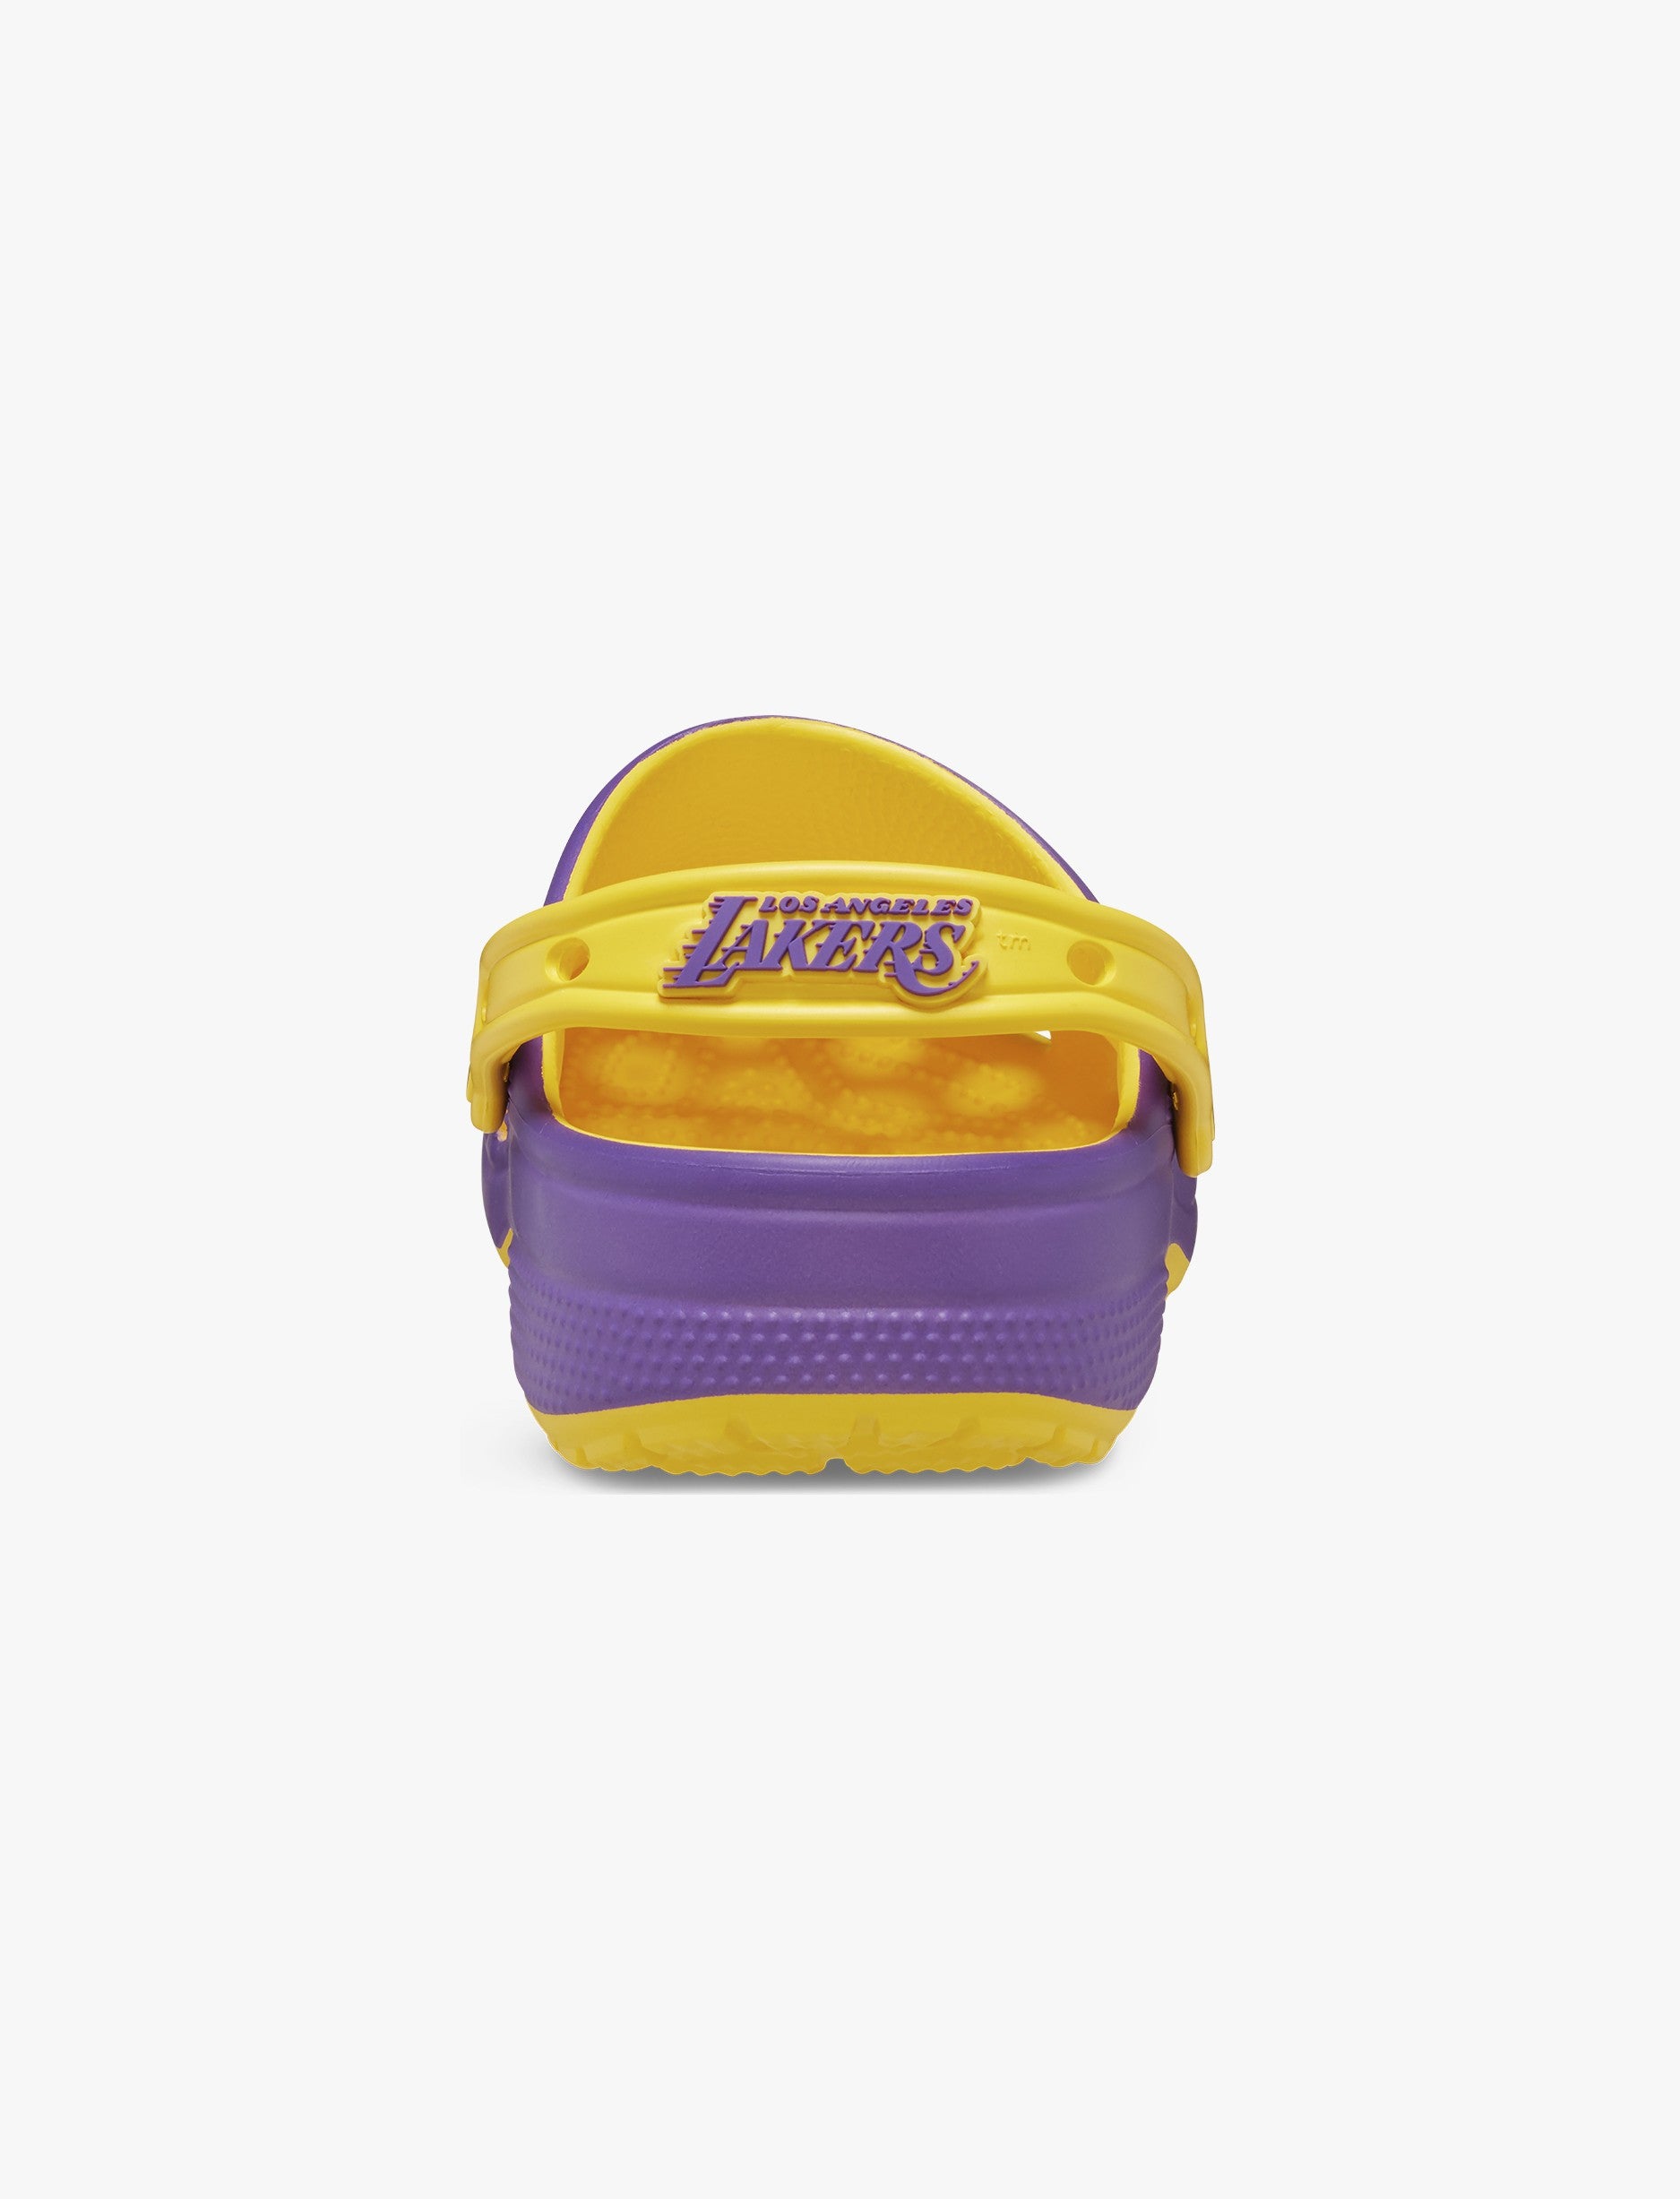 Crocs NBA Los Angeles Lakers Classic Clog - כפכפי קלוג קרוקס עם הדפס לוס אנג'לס לייקרס